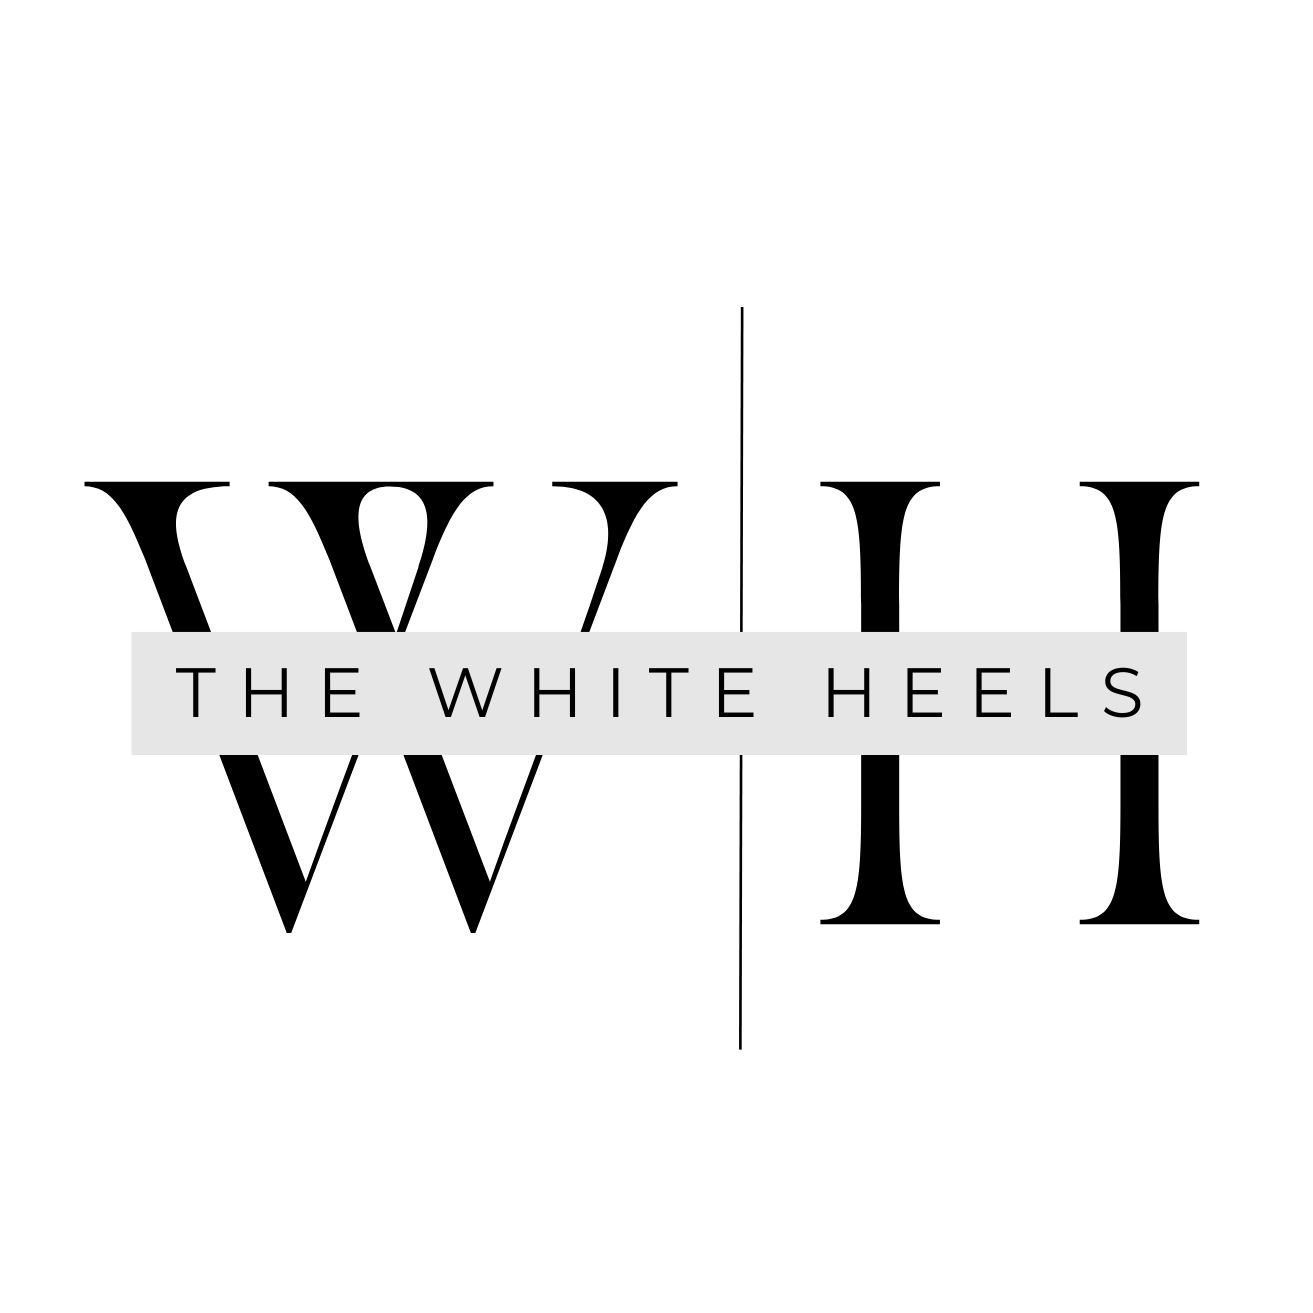 The White Heels